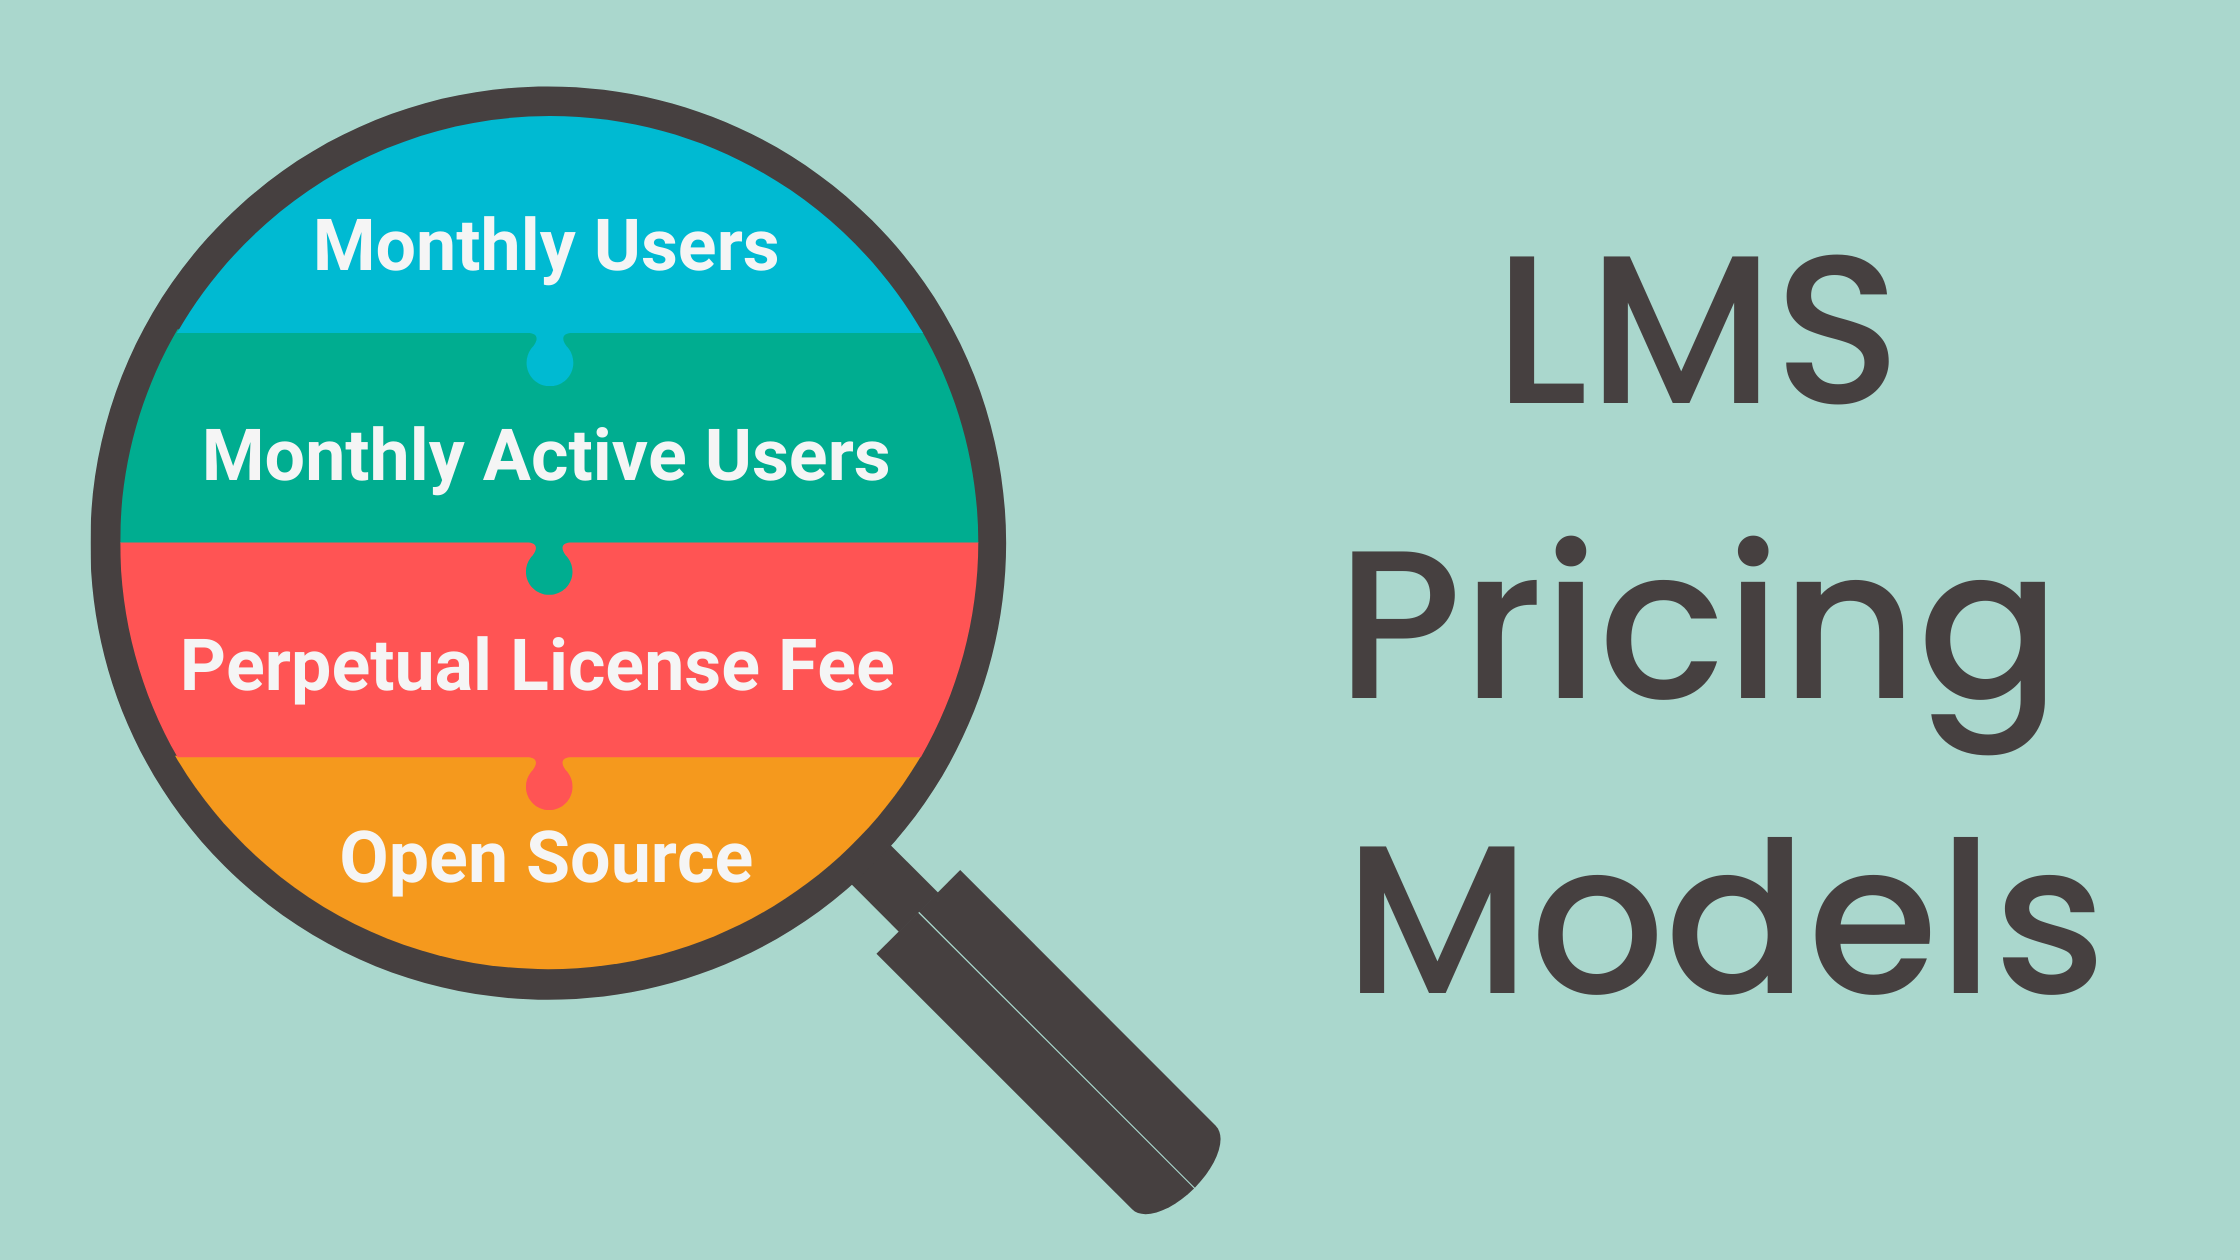 LMS Pricing Models